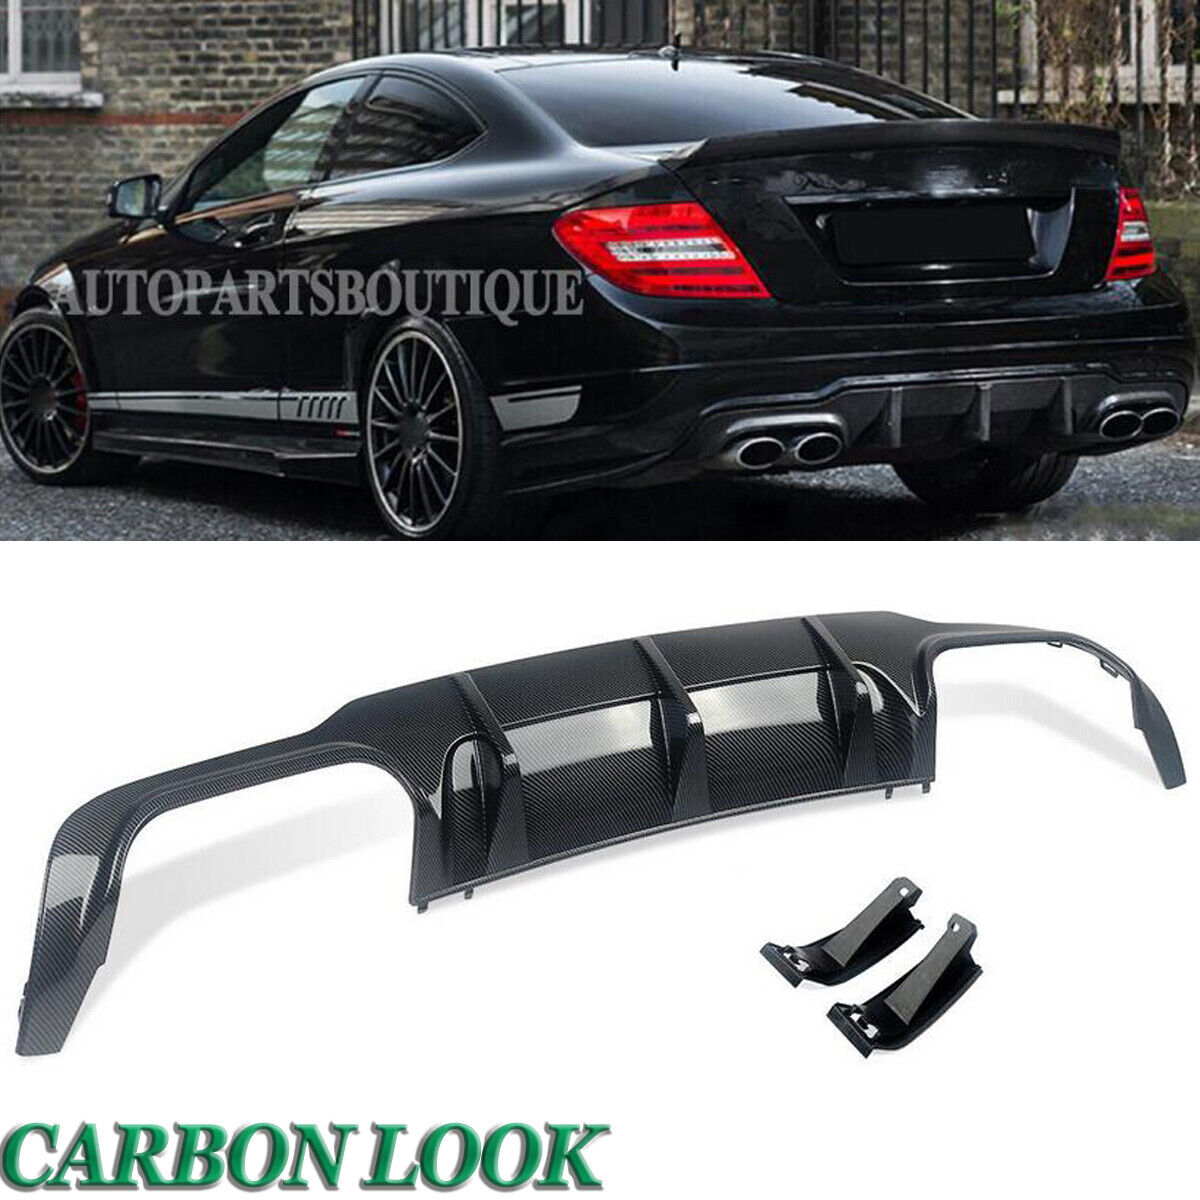 Carbon Look Rear Diffuser Lip For Mercedes Benz W204 C250 C204 C63 AMG 2012-2015